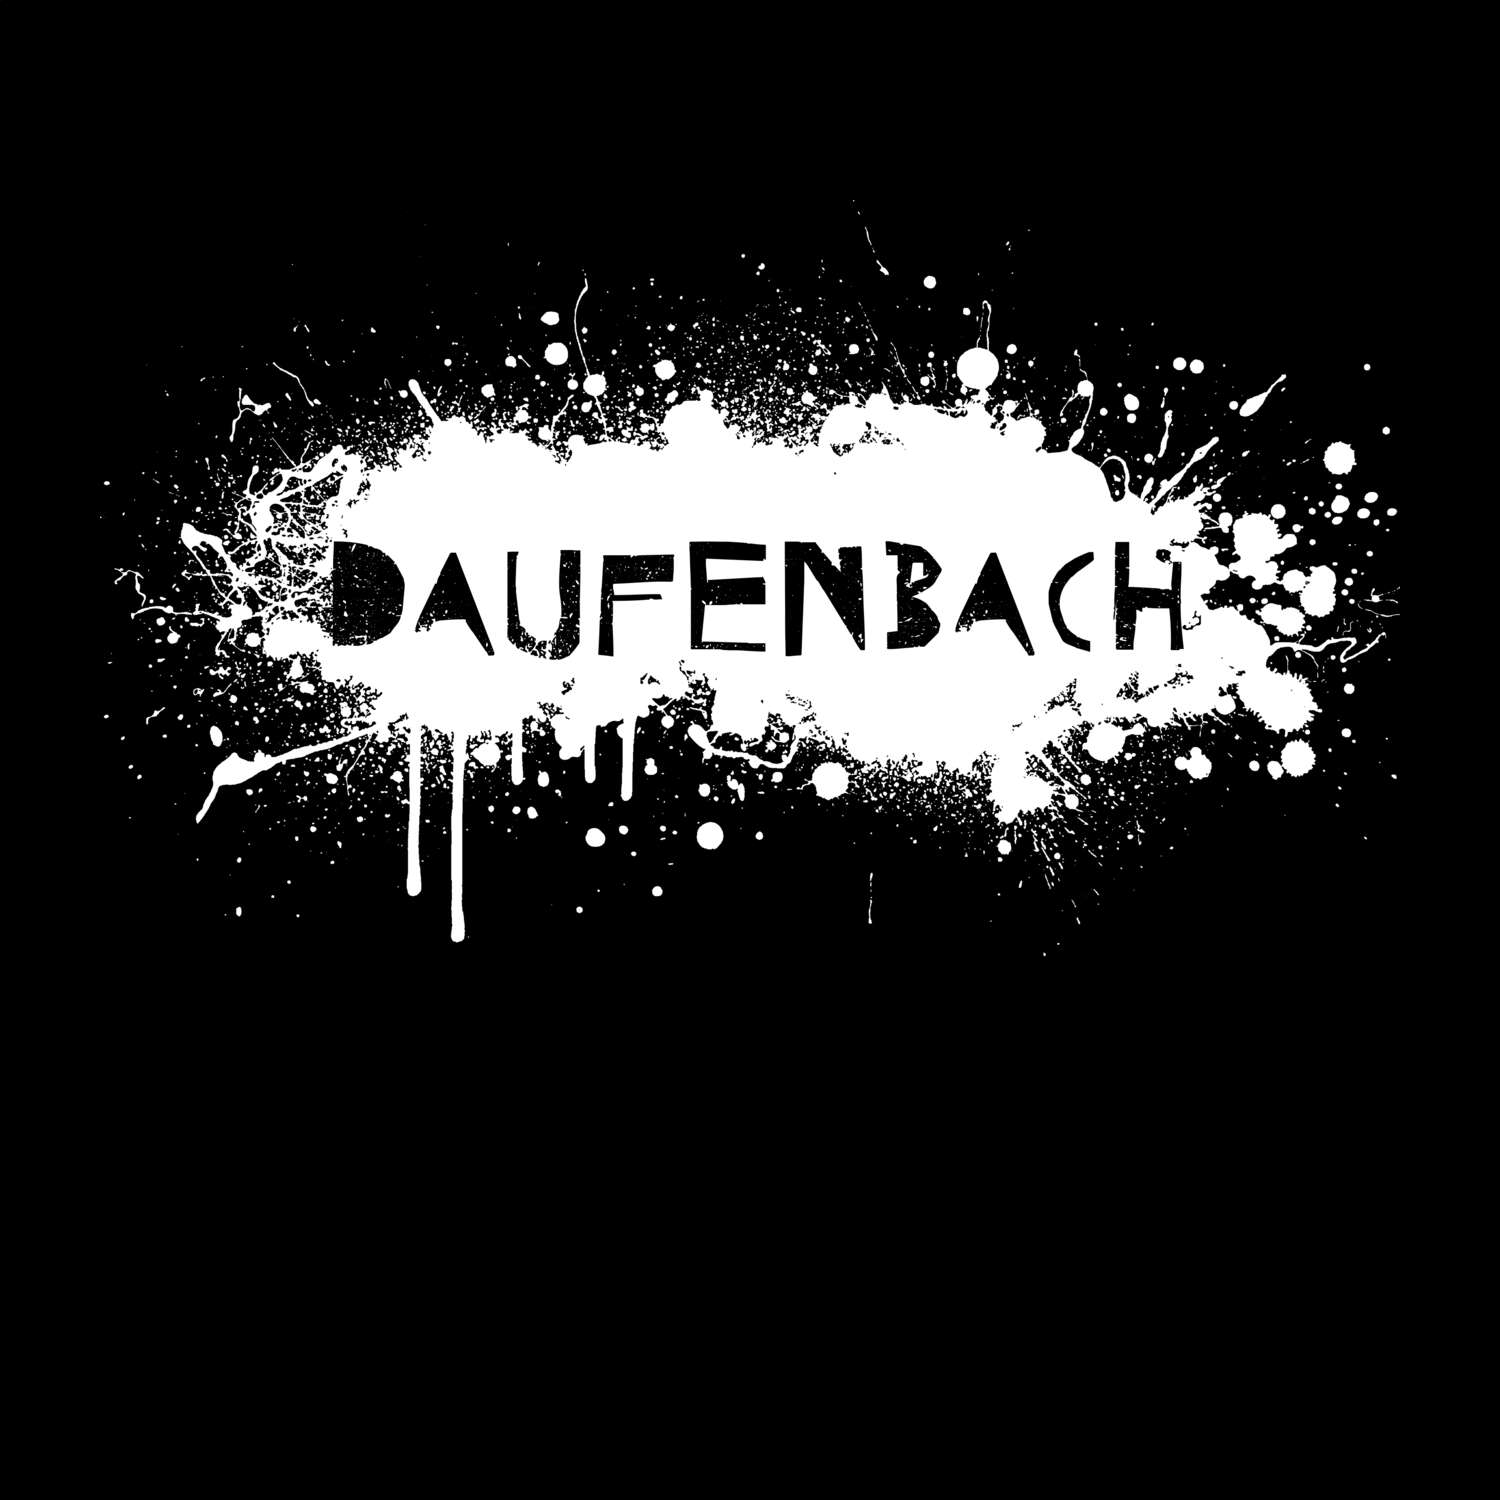 Daufenbach T-Shirt »Paint Splash Punk«